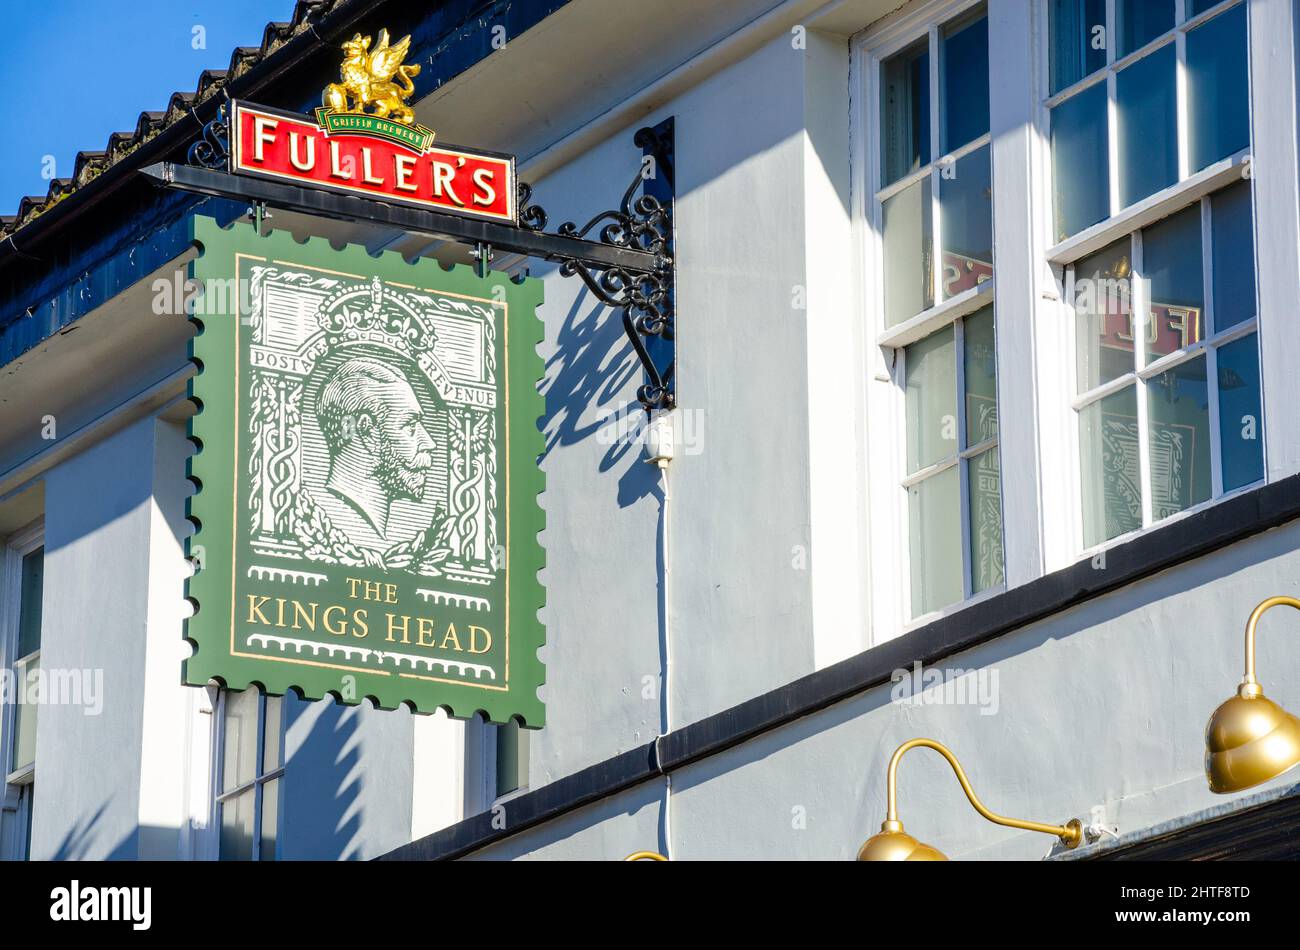 The Kings Head is a Fuller's pub in Earl's Court, London, UK Stock Photo